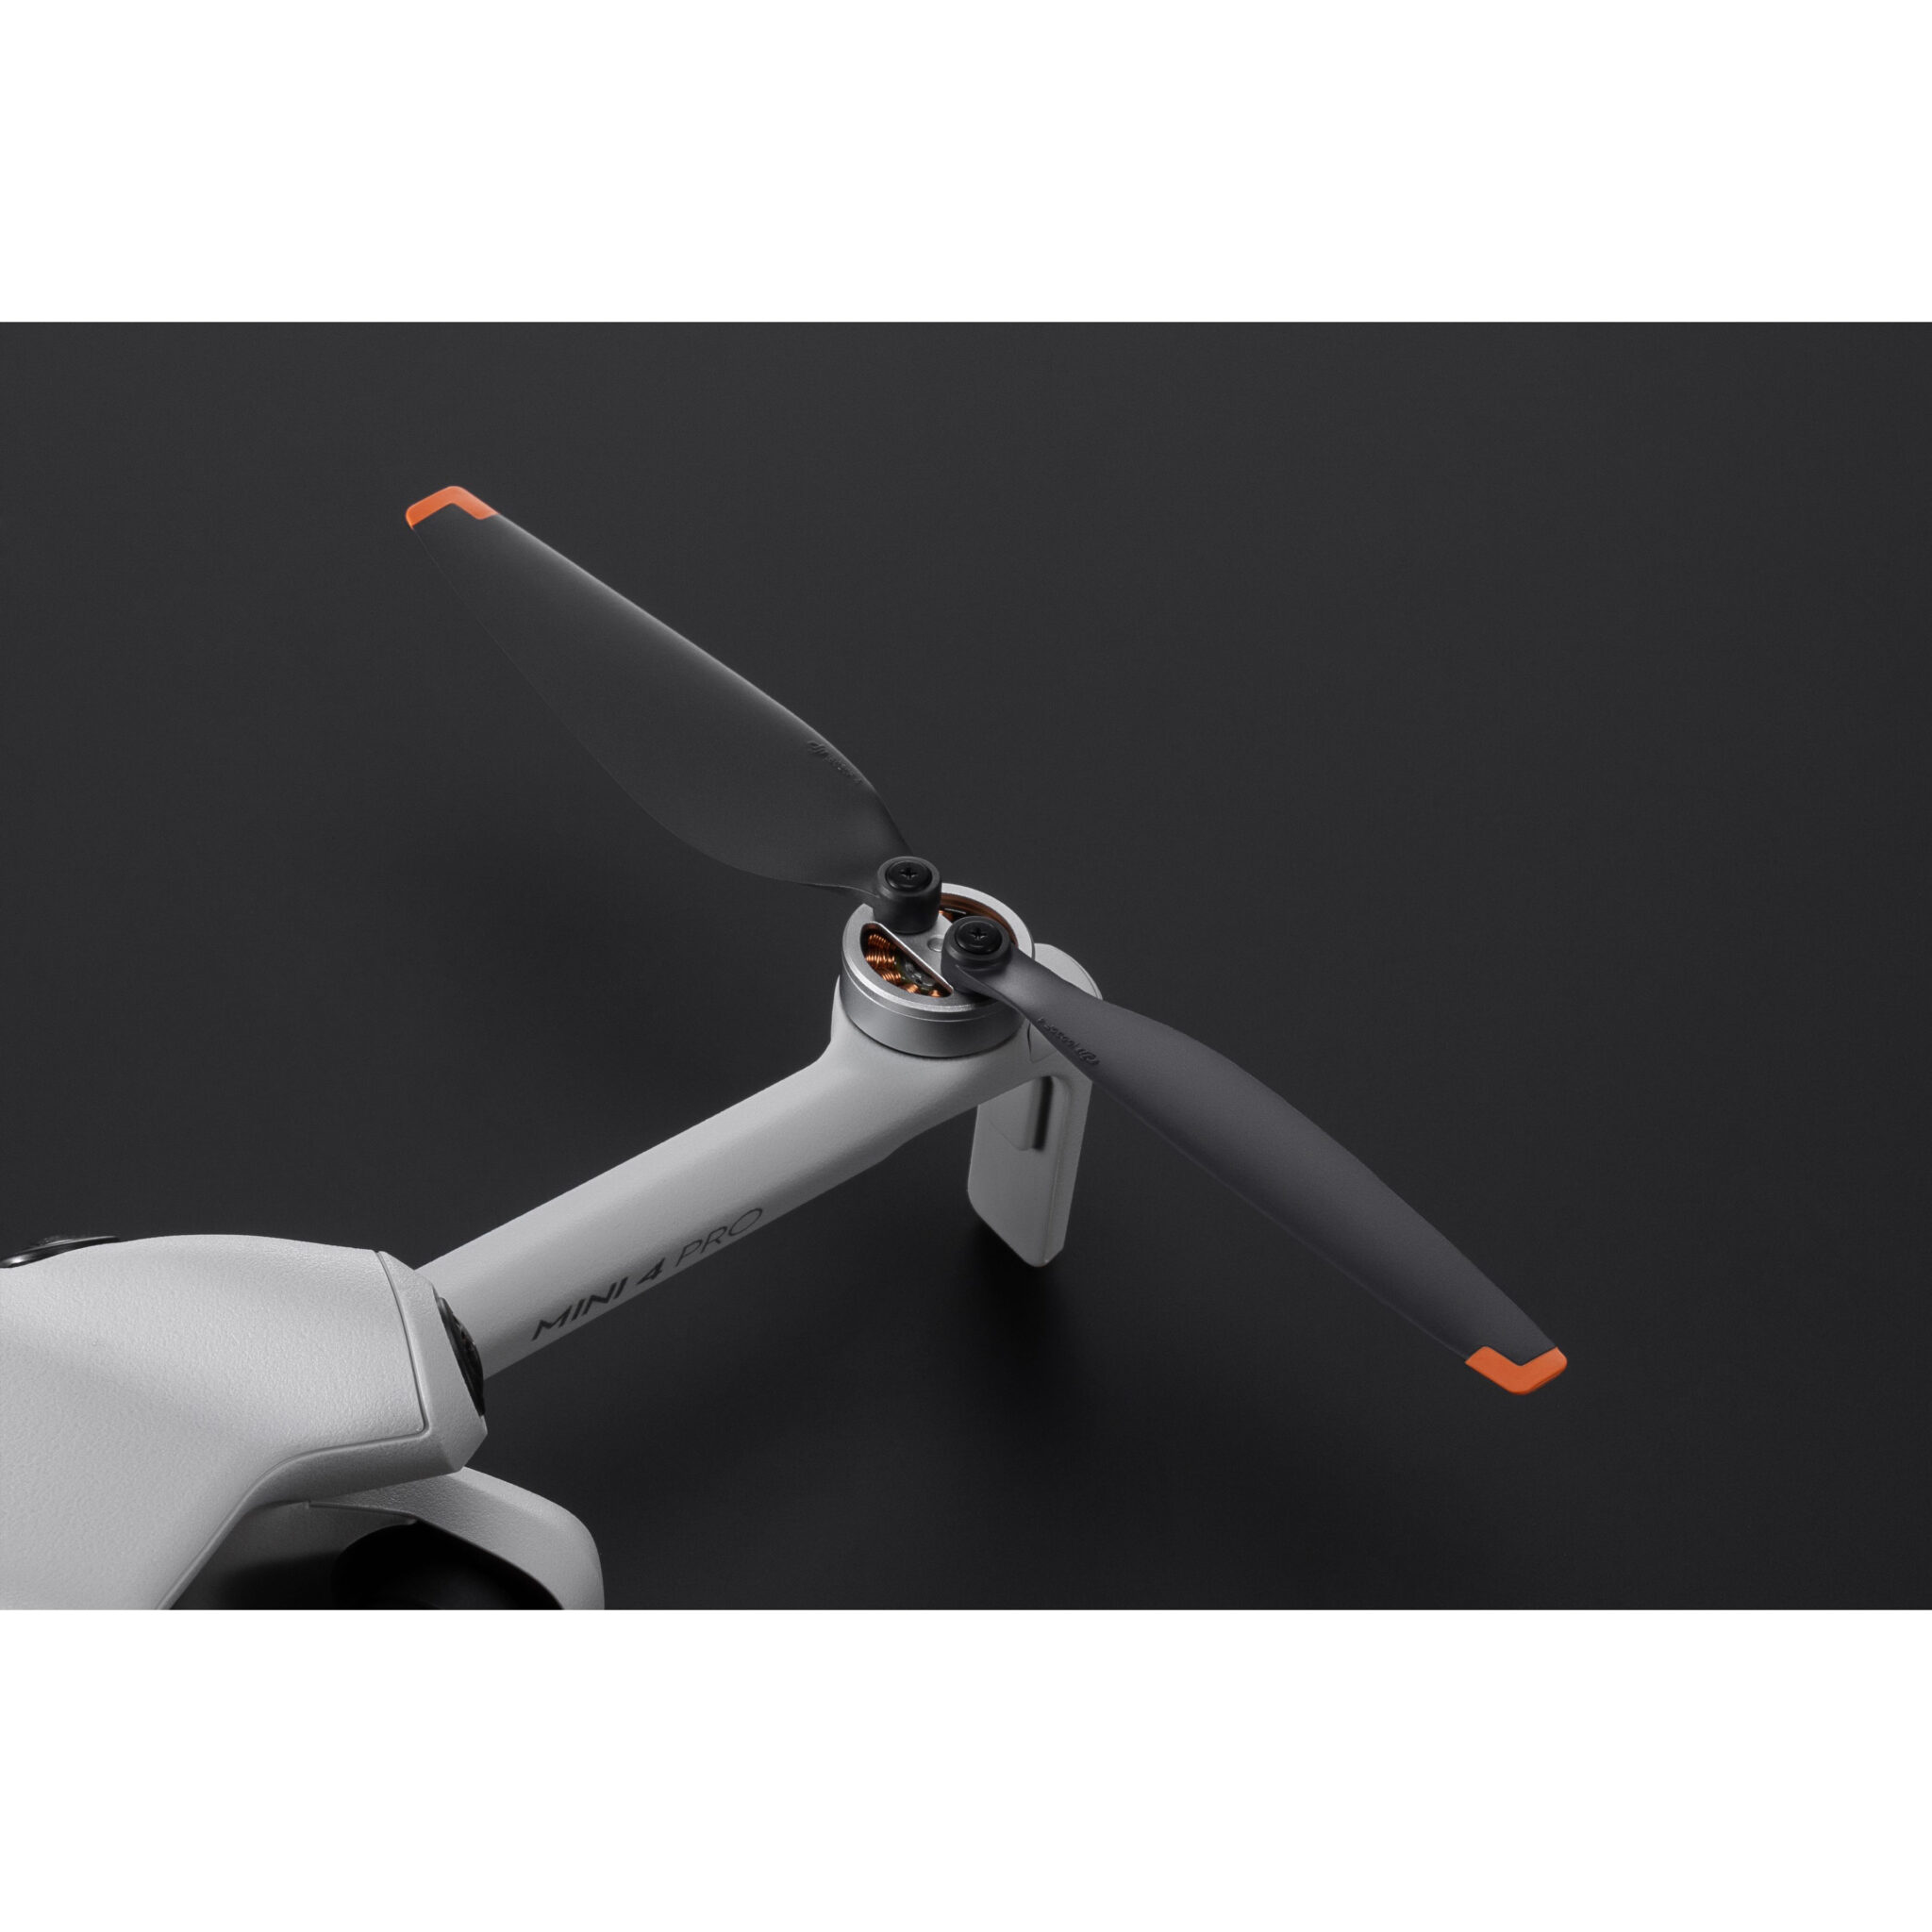 DJI Mini 4 Pro: Drone for Sale, AG Video Drone